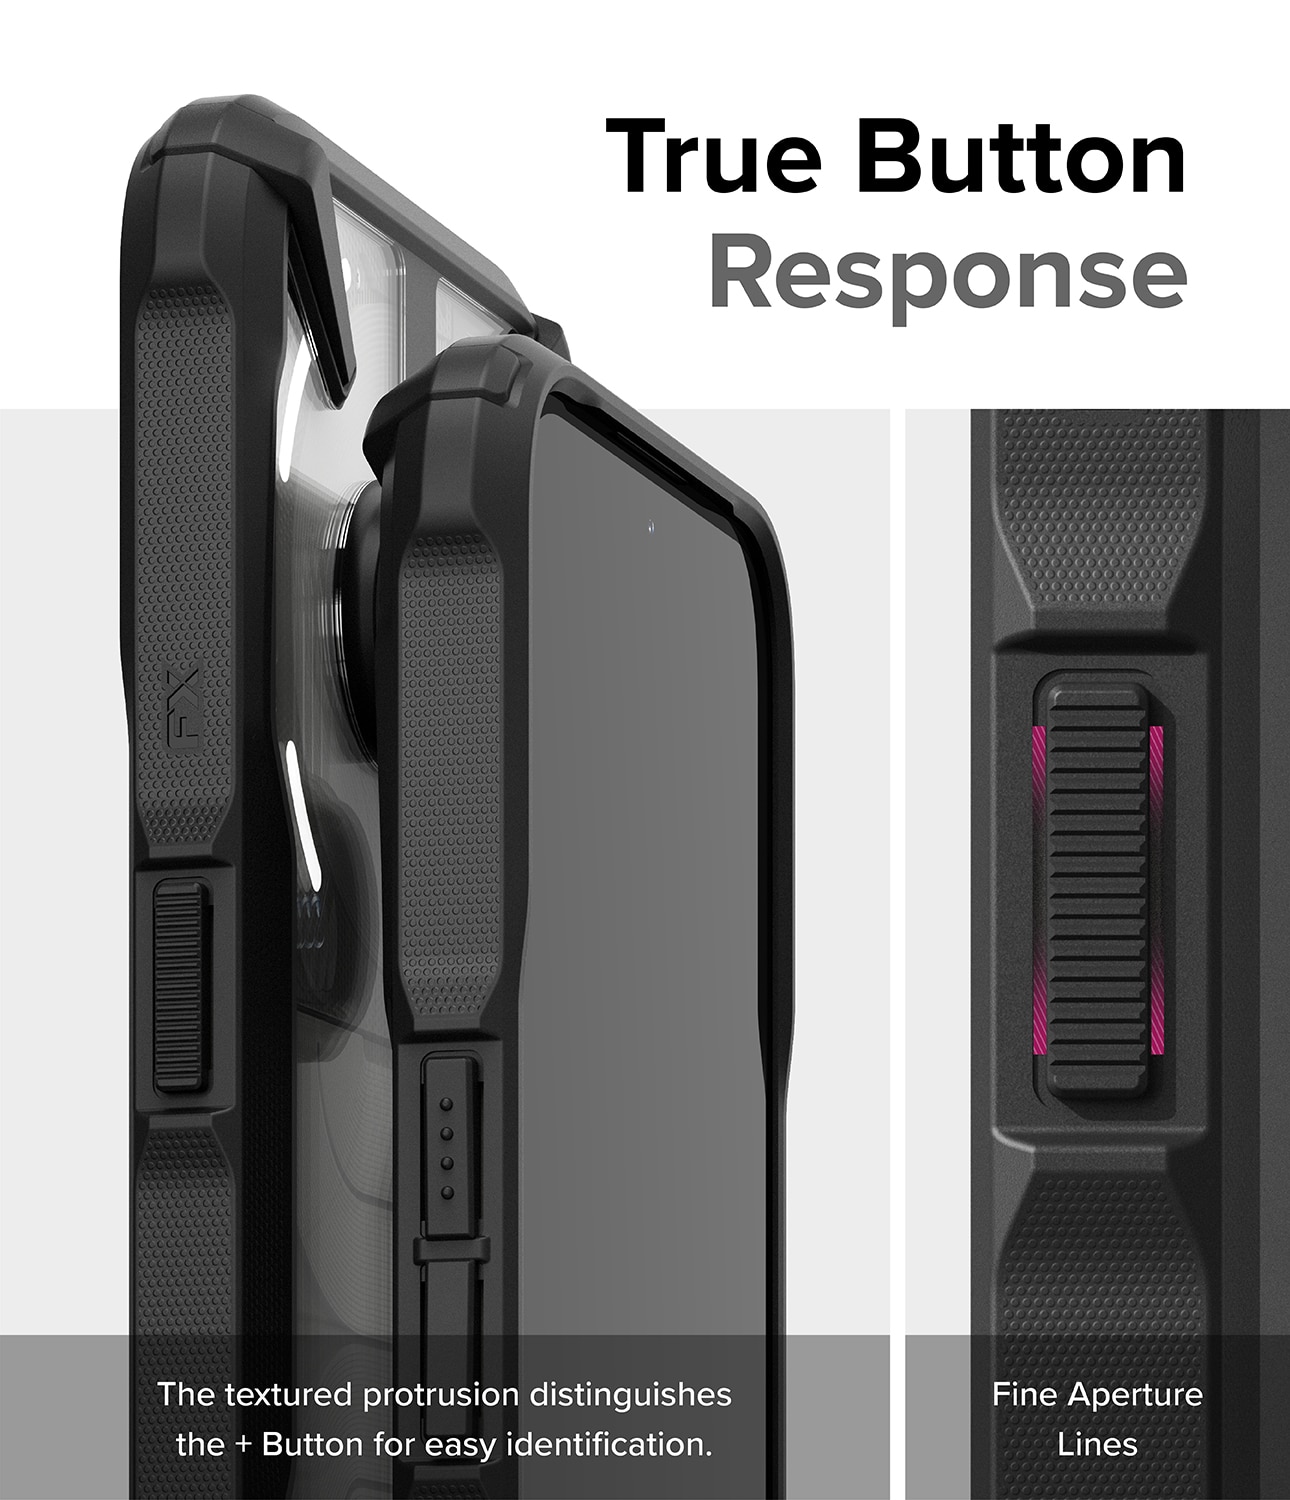 Fusion X Case Nothing Phone 2a schwarz